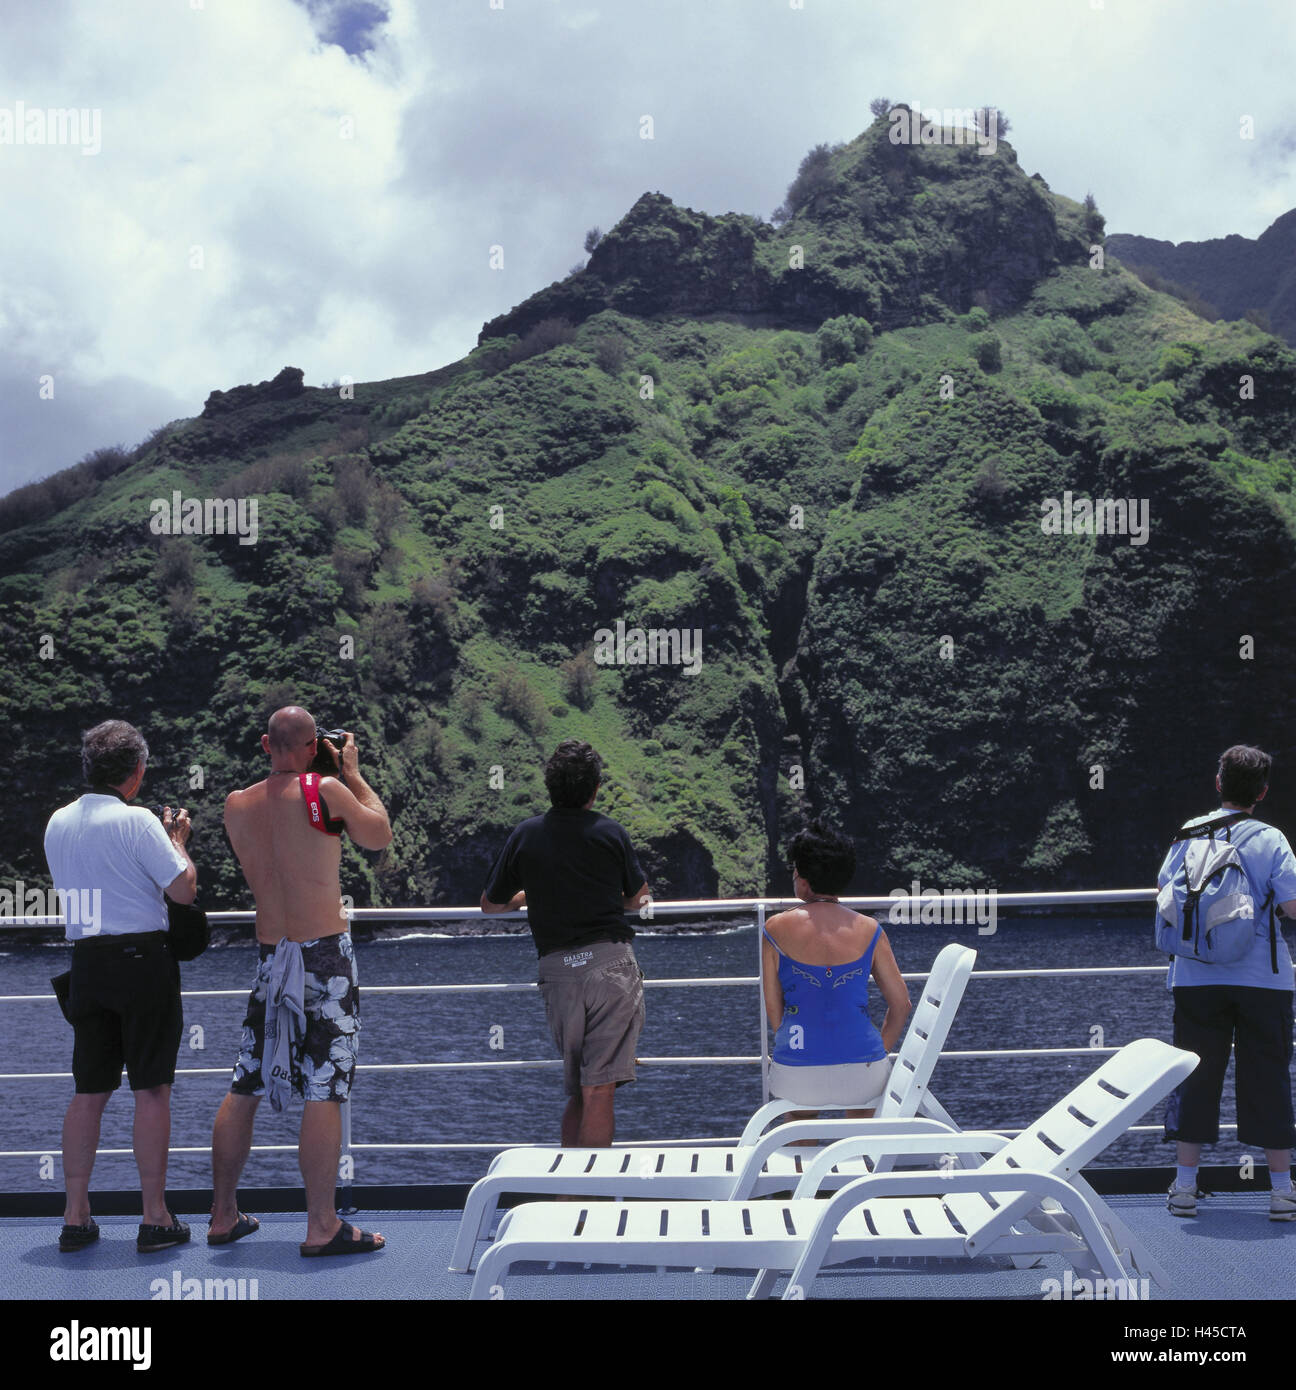 French Polynesia, Tahuata, Costa Tu Vaitahu, ship cap, tourist, back view, holiday ship, ship, deck, person, stand, take photos, boat tour, navigation, travel, vacation, tourism, Stock Photo